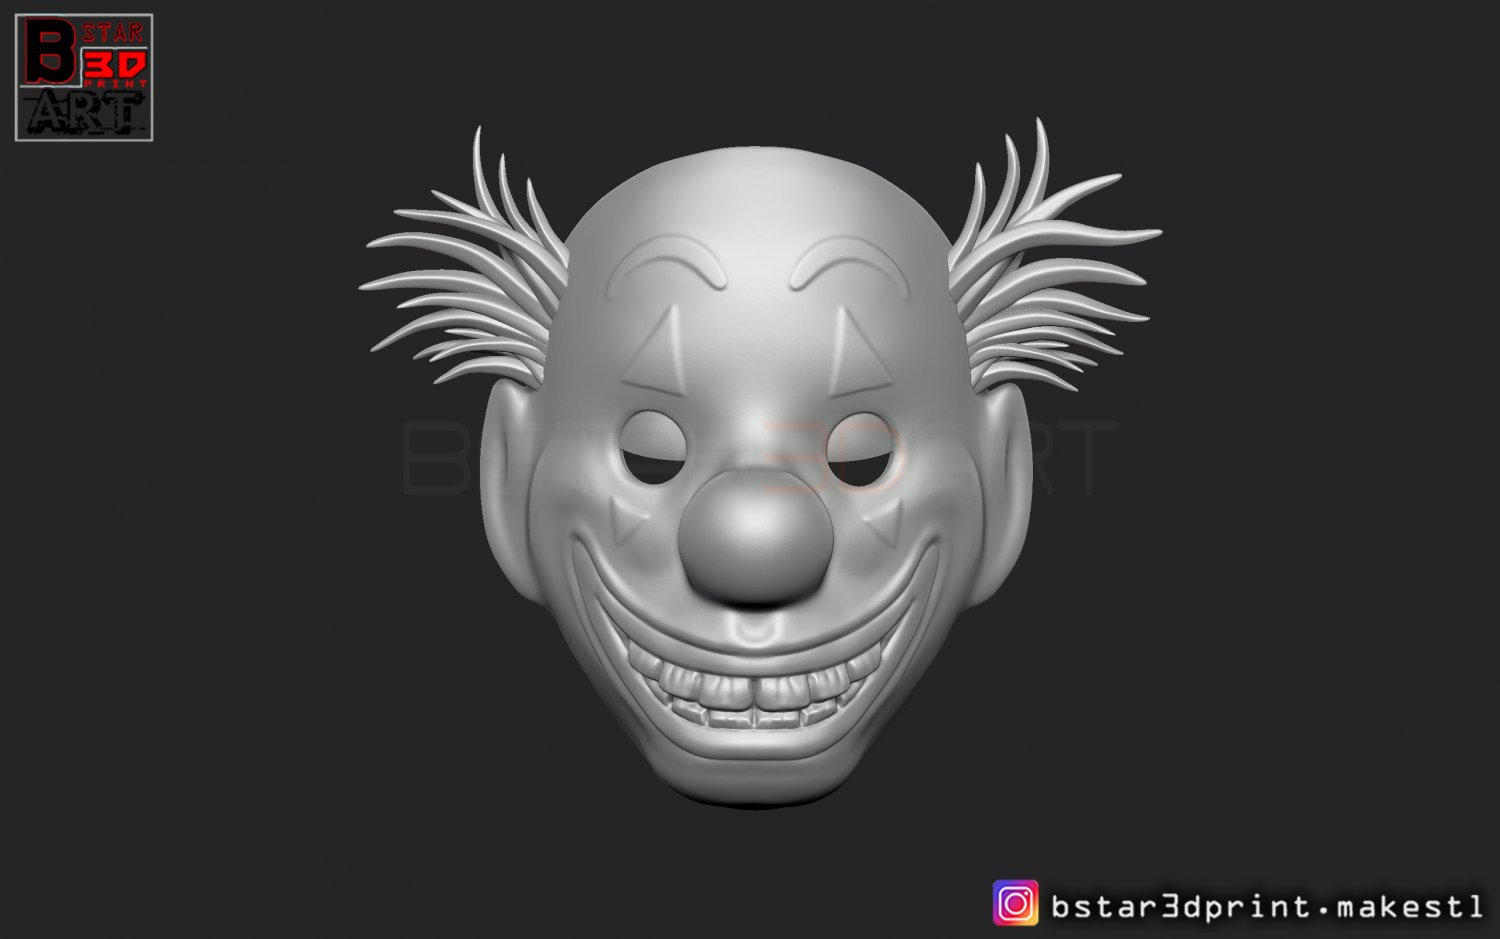 henchmen dark knight clown joker mask costume helmet Modelo de Impressão 3D  in Brinquedos 3DExport